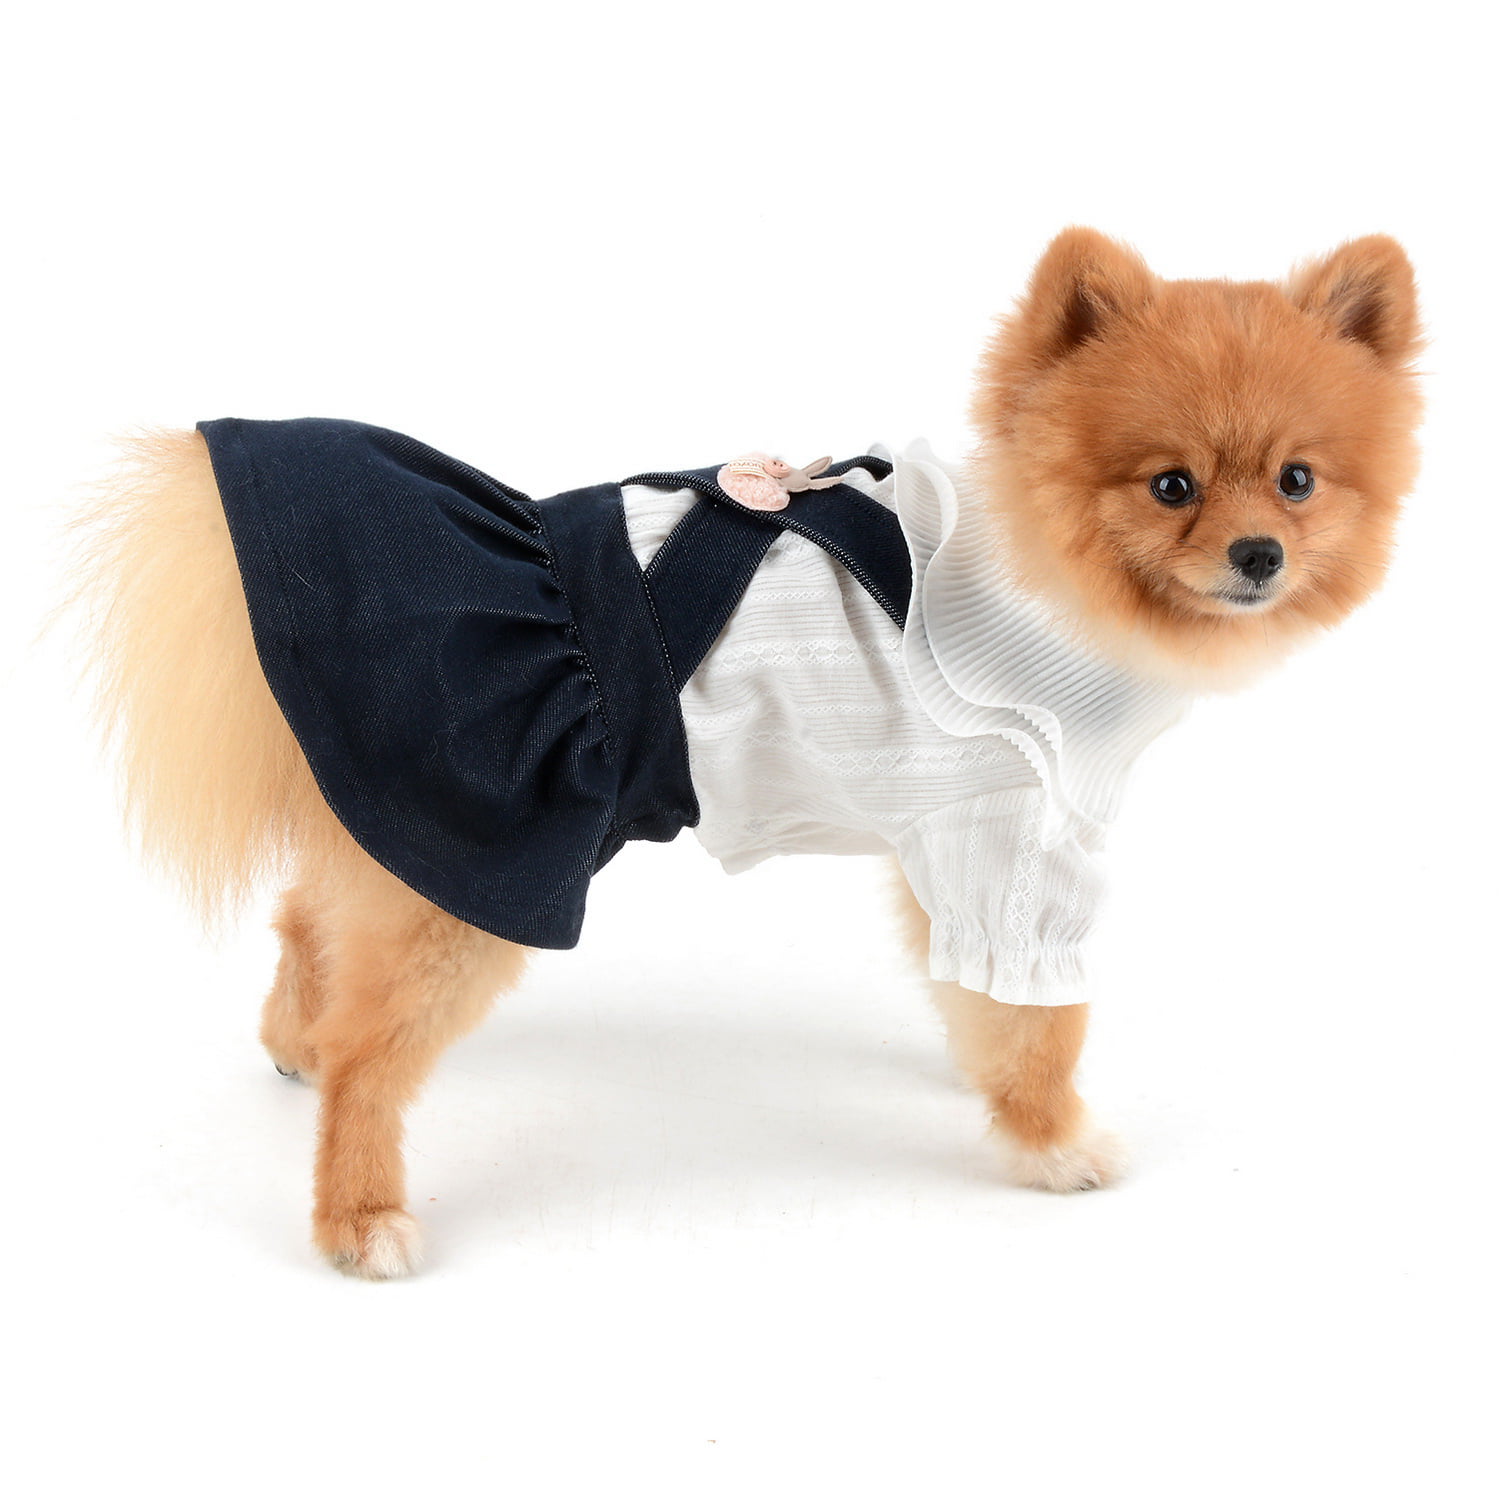 SMALLLEE_LUCKY_STORE Small Dog/Cat Clothes Girls Pet Strap Denim Dress Ruffle Collar Blouse Shirt Puppy Summer Outfits